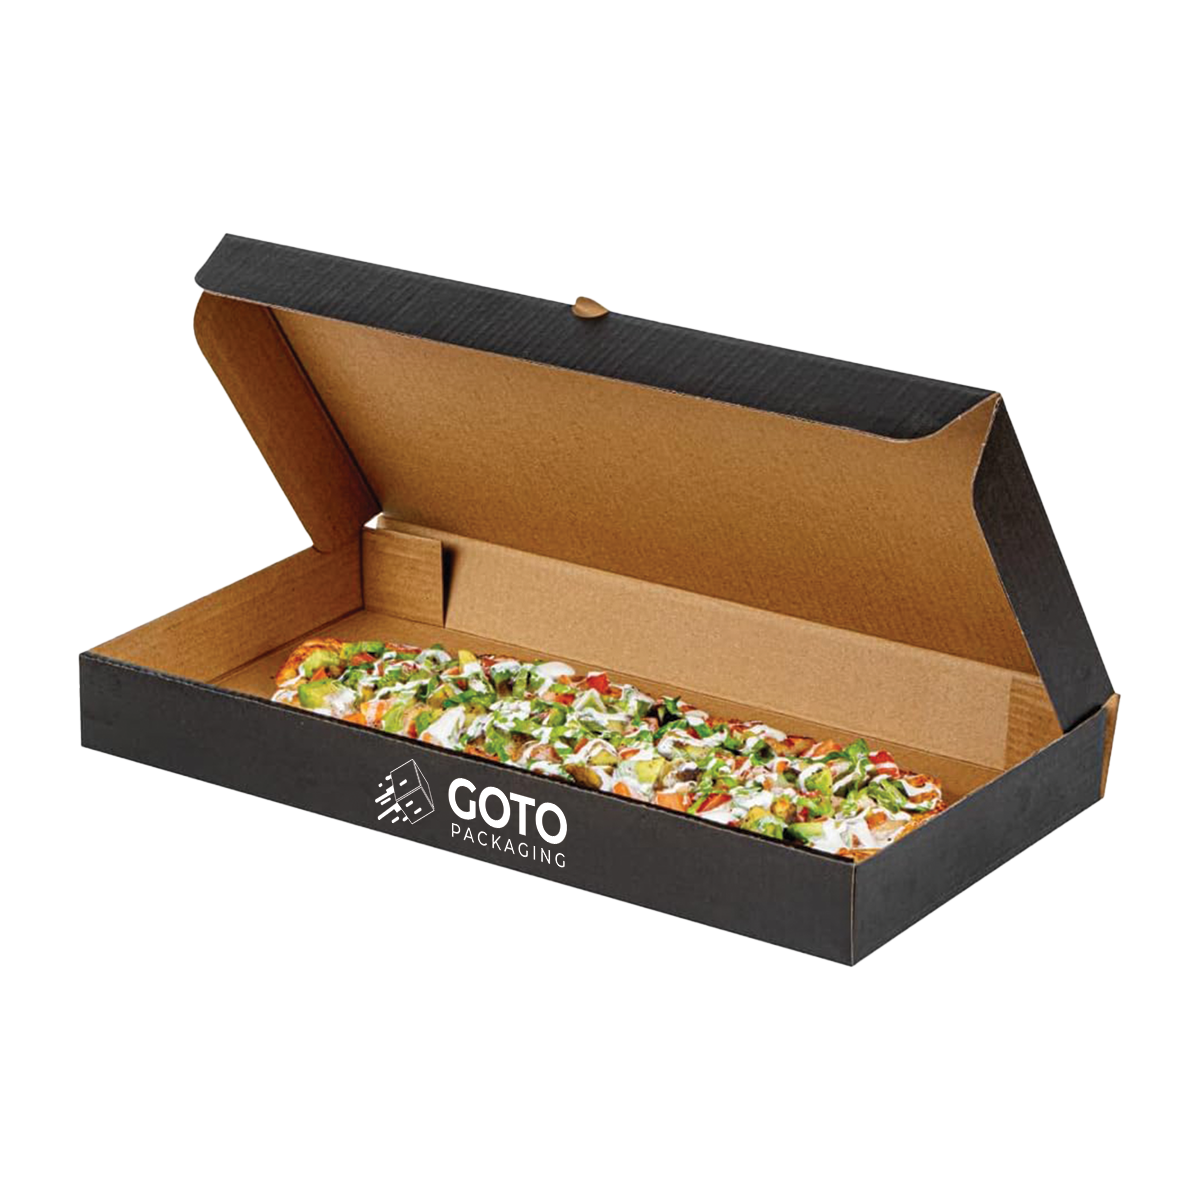 Wholesale Flatbread Pizza Boxes